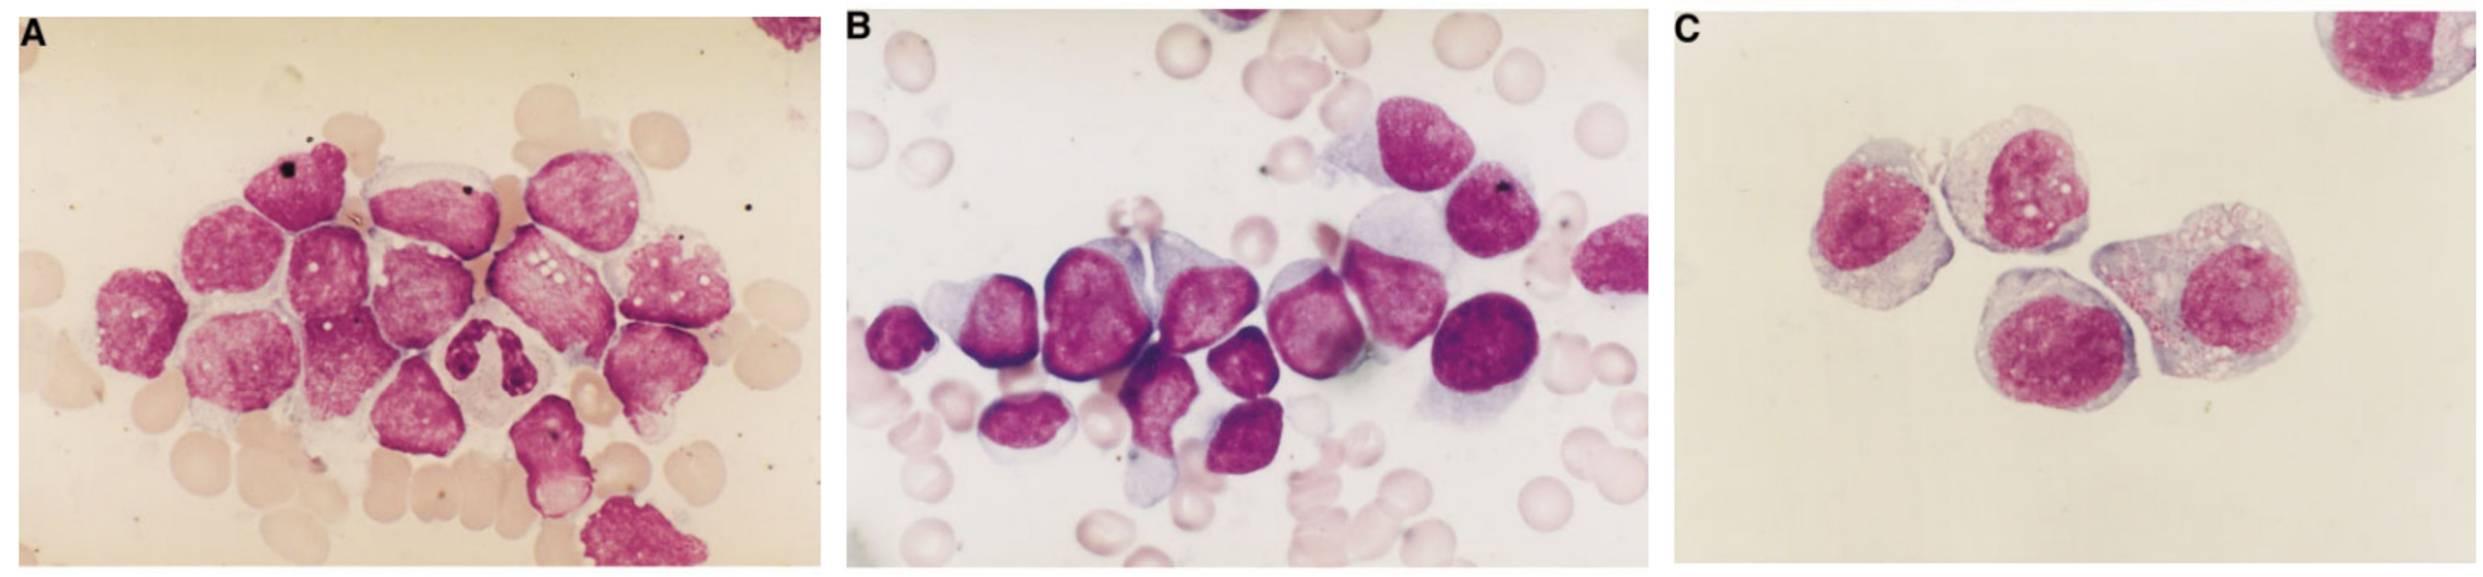 Fig. 1 Morphology of the (A) original leukemic cells, (B) relapsed leukemic cells and (C) Kasumi-6 cells. (Asou H, et al., 2003)